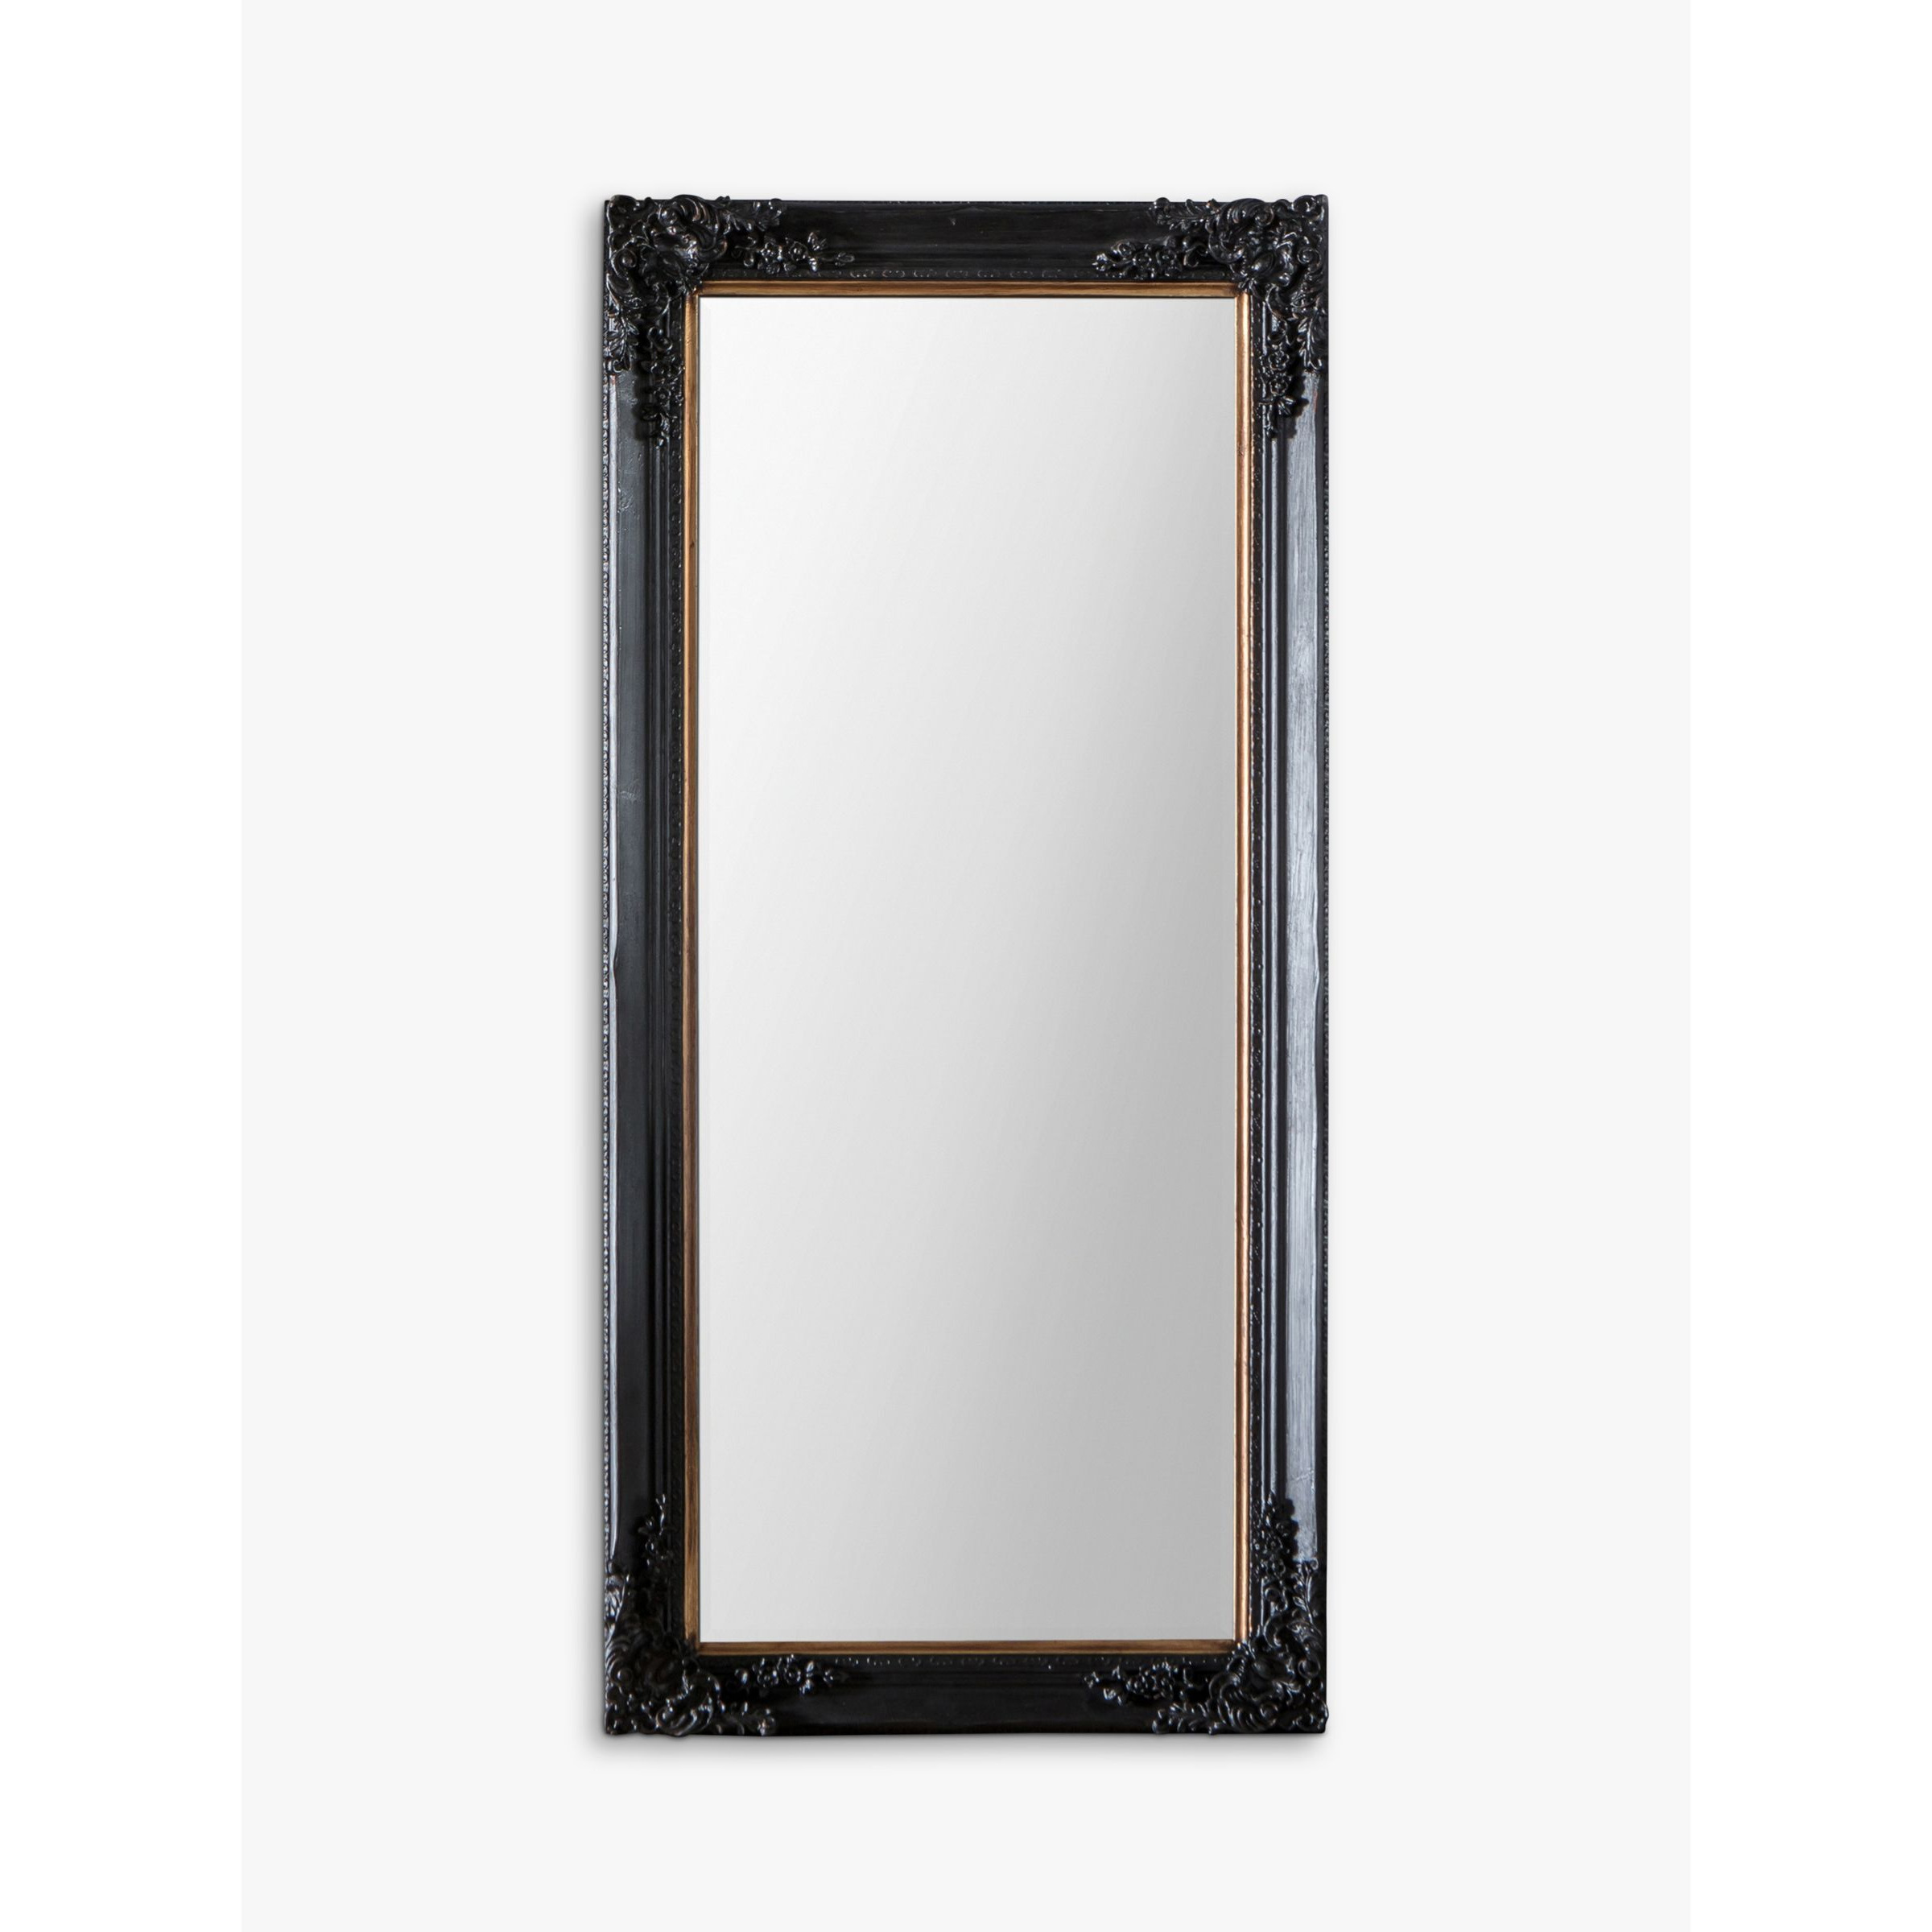 Gallery Direct Greenley Rectangular Wall Mirror, Antique Black - image 1